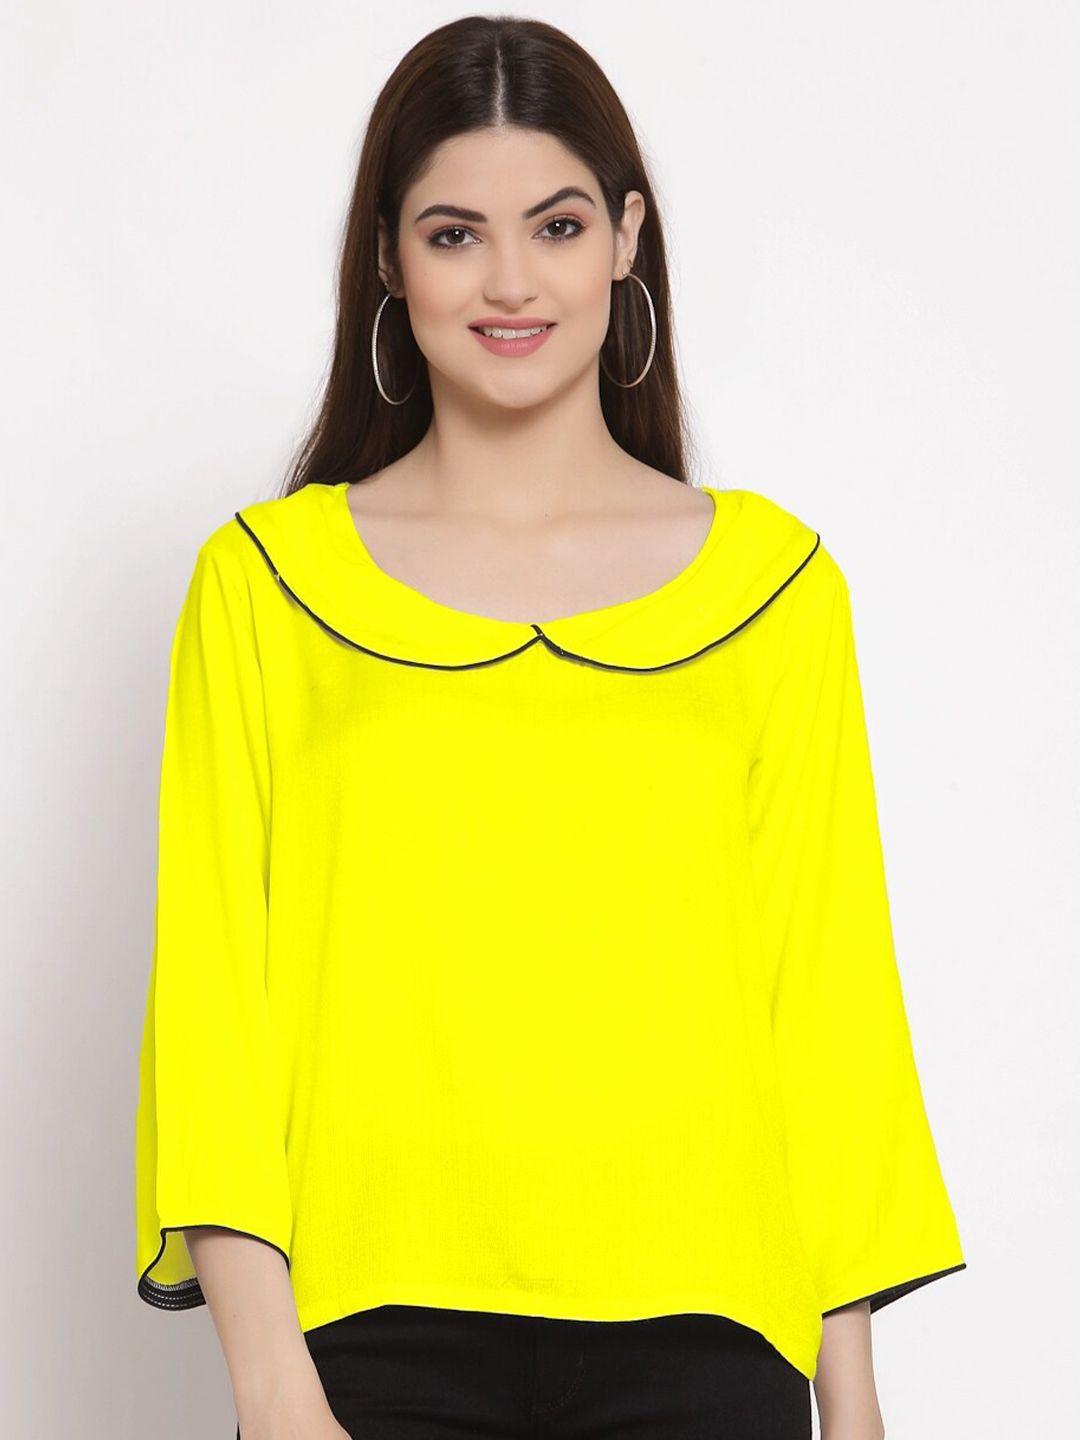 patrorna women yellow solid top